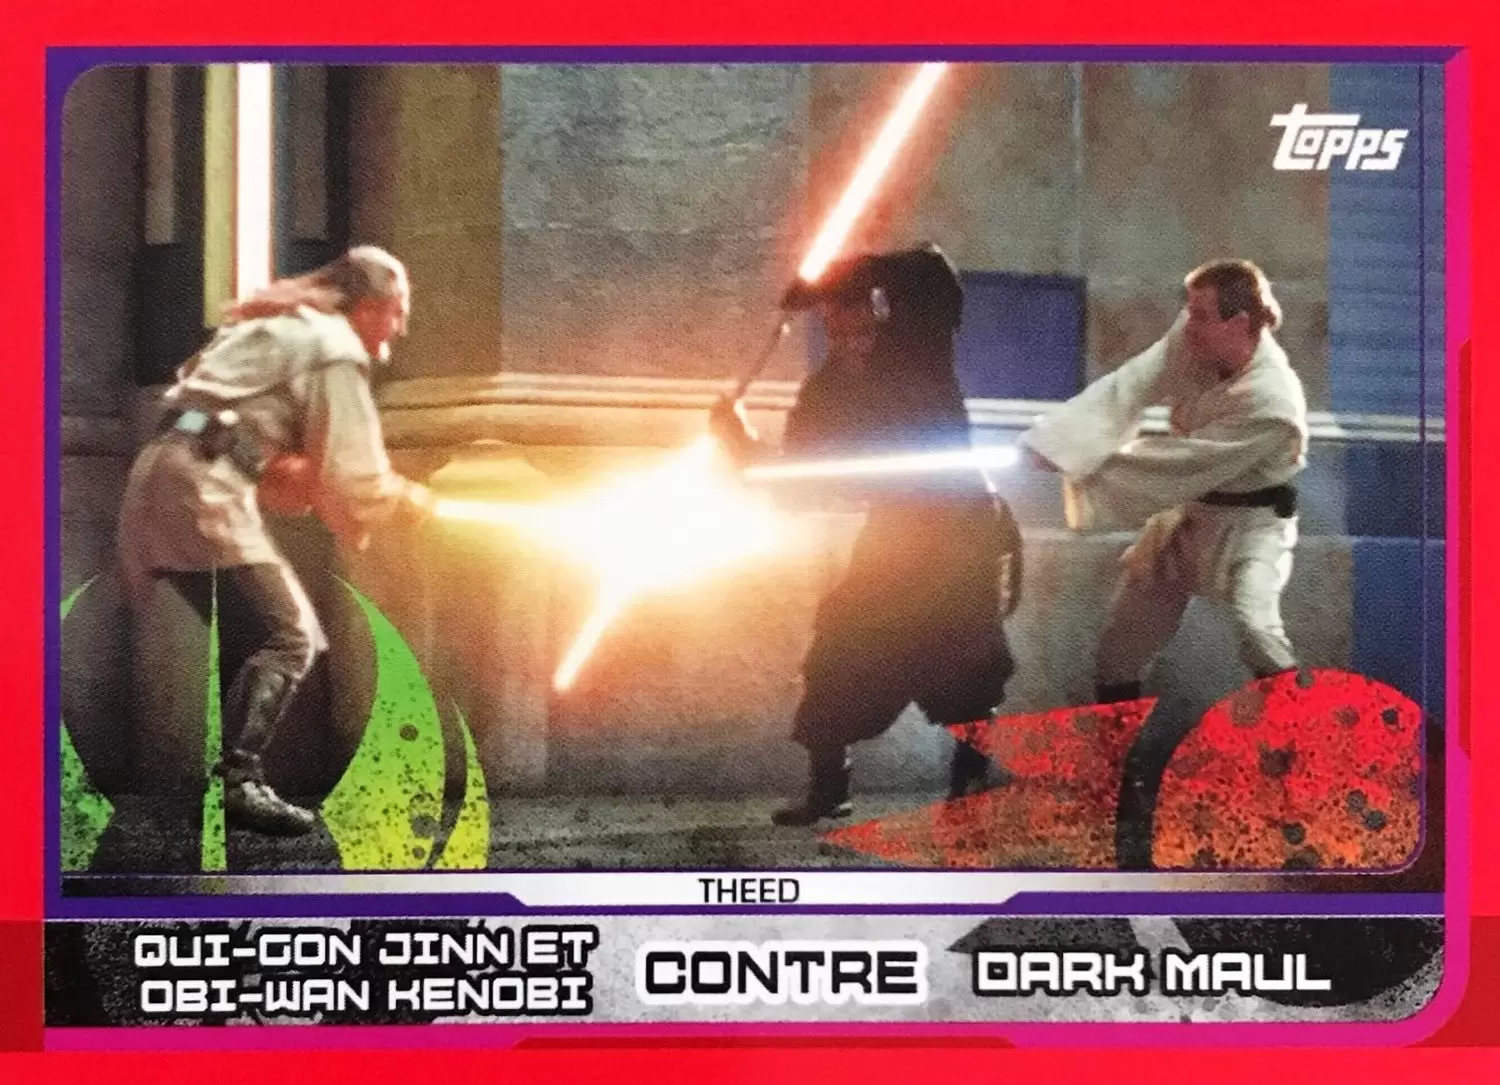 Topps - Voyage vers Star wars : Les Derniers Jedi - Qui-Gon Jinn et Obi-Wan Kenobi contre Dark Maul (Theed)